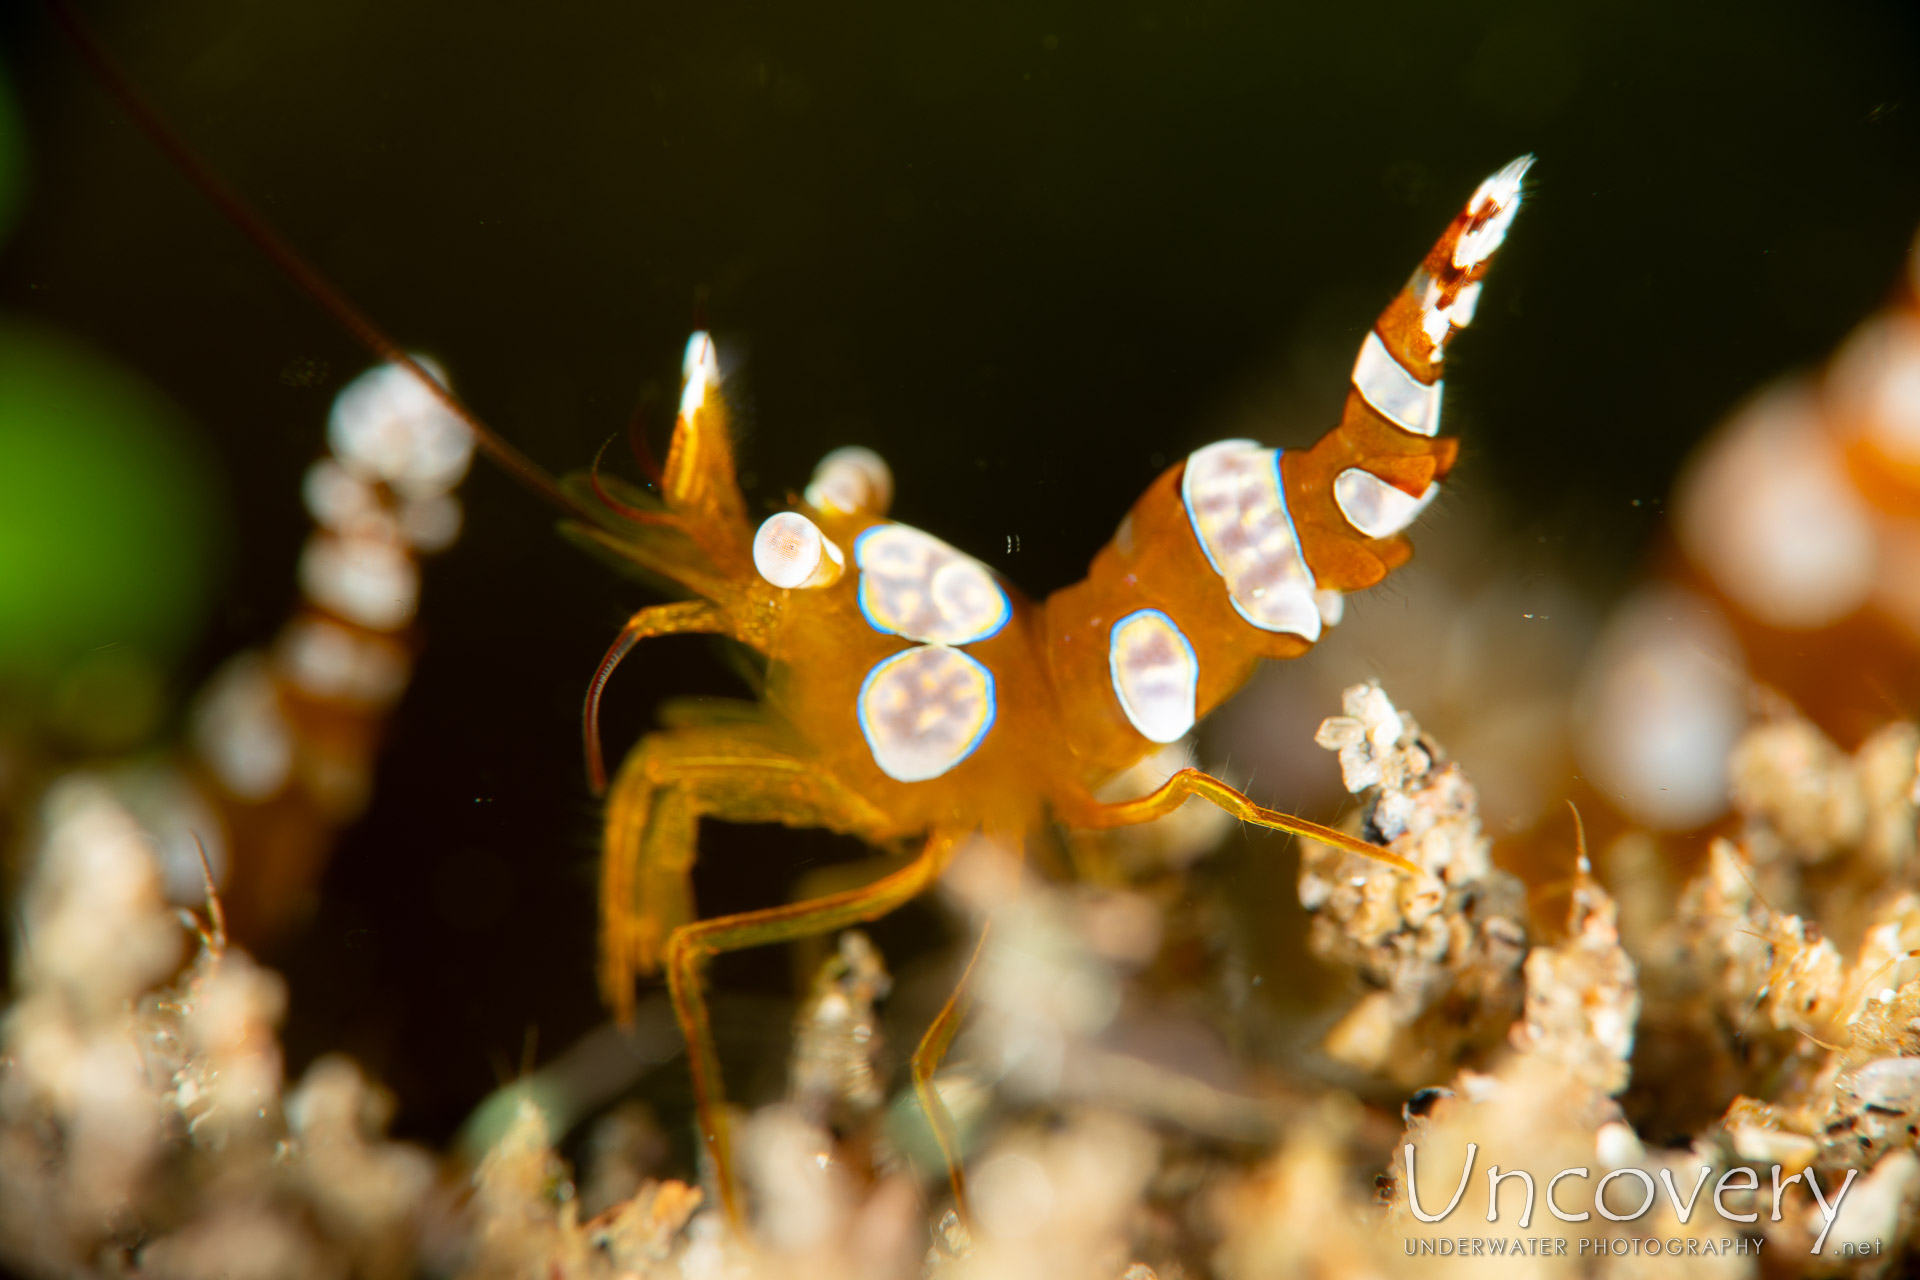 Sexy Shrimp (thor Amboinensis), photo taken in Philippines, Negros Oriental, Dauin, Atmosphere House Reef